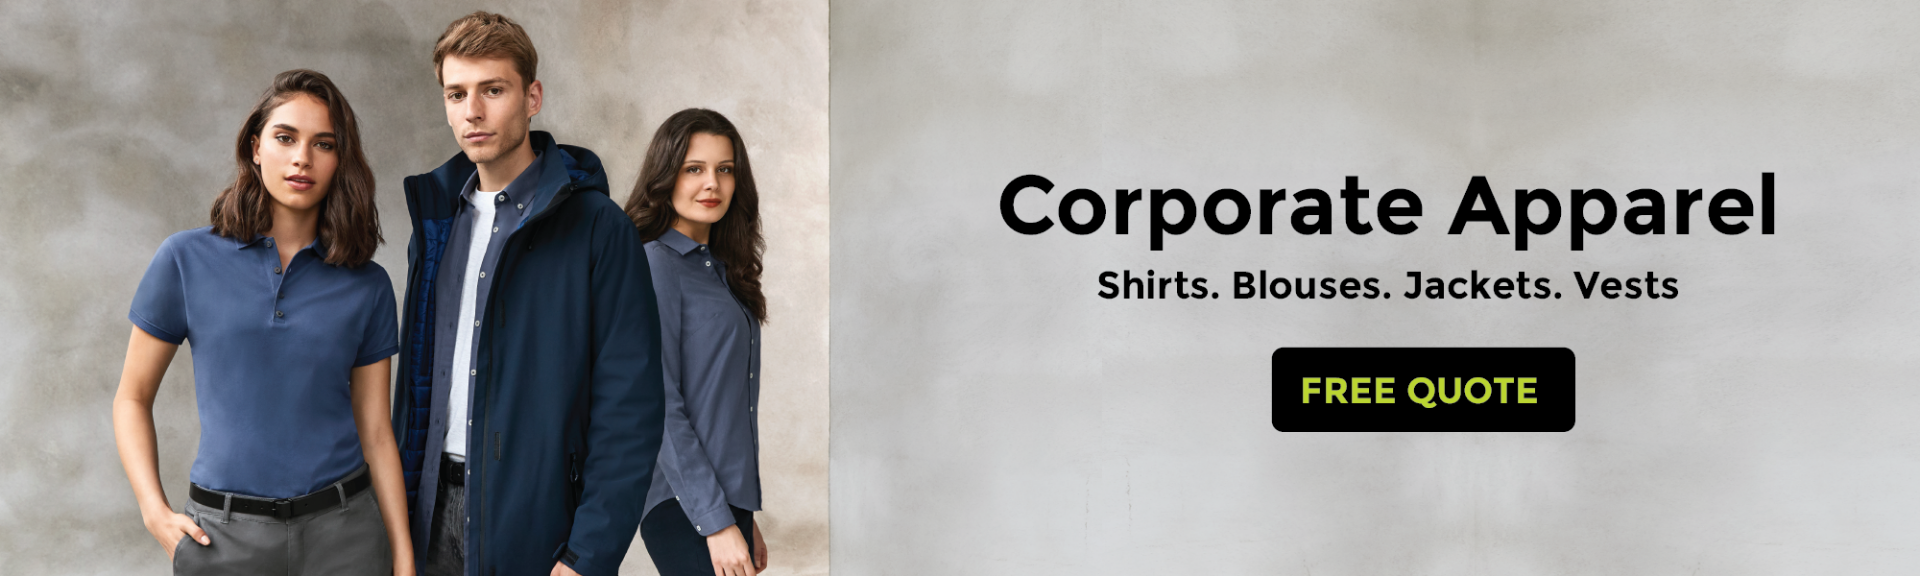 Corporatewear Direct - Home of Corporate Wear Apparel